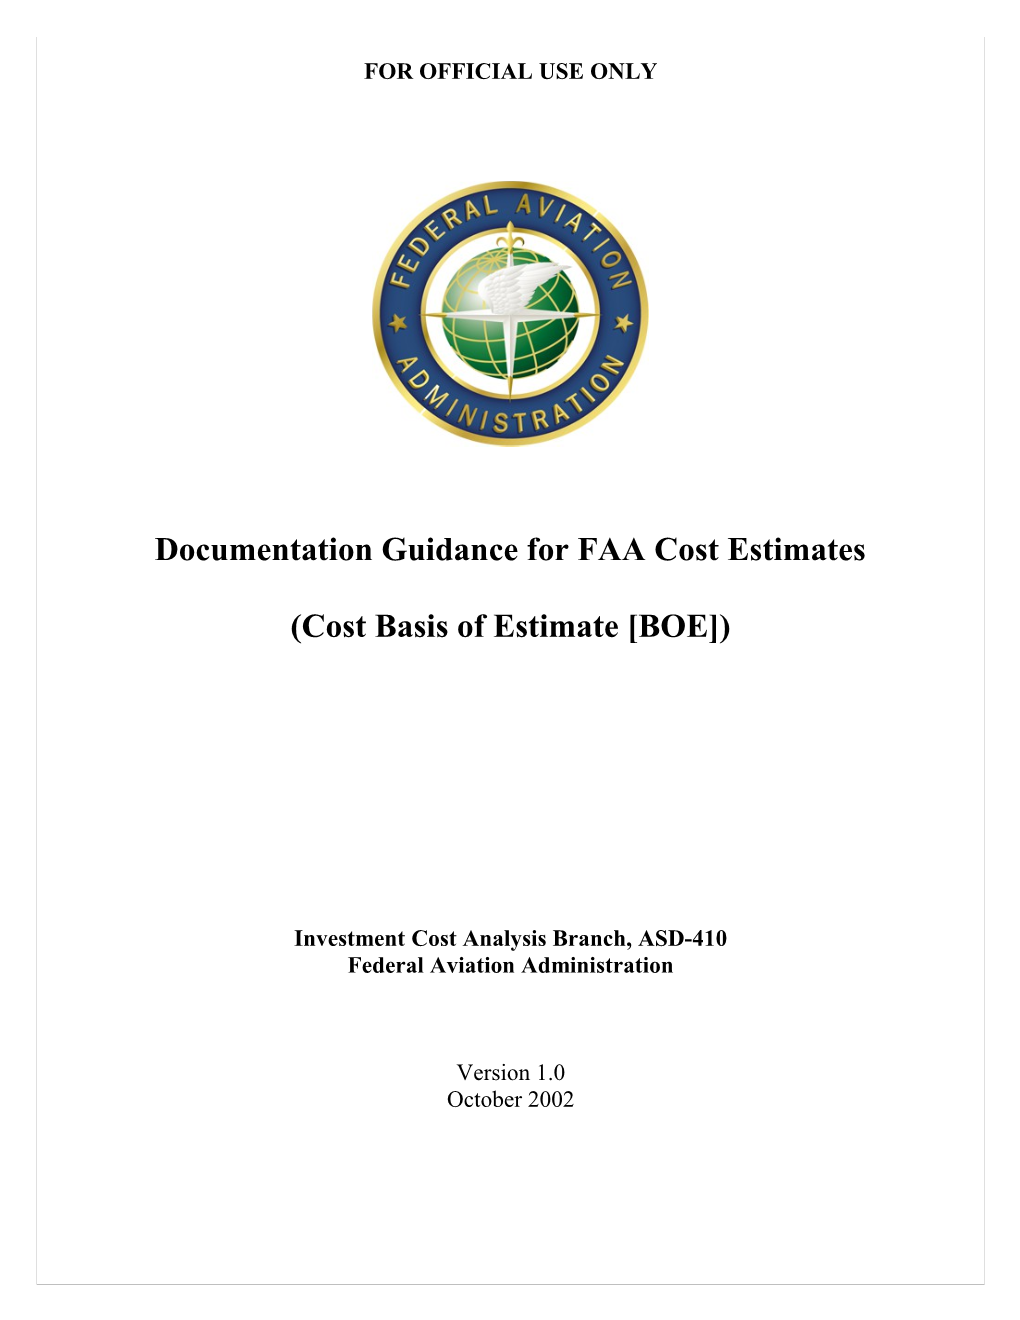 Documentation Guidance for FAA Cost Estimates